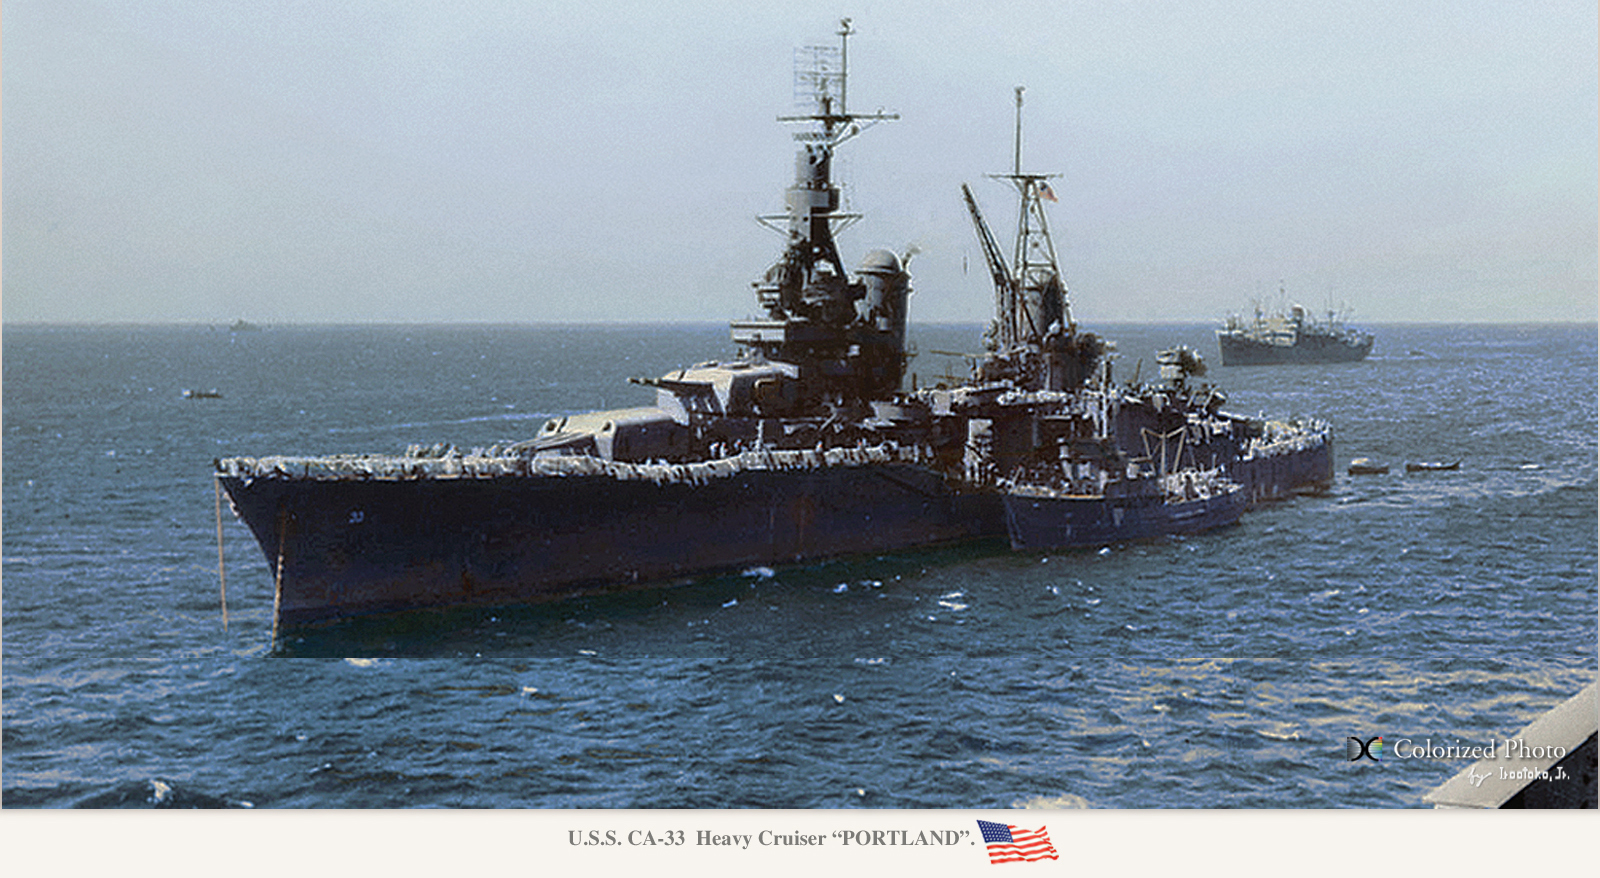 USS Portland, colorized by Hirootoko JR.